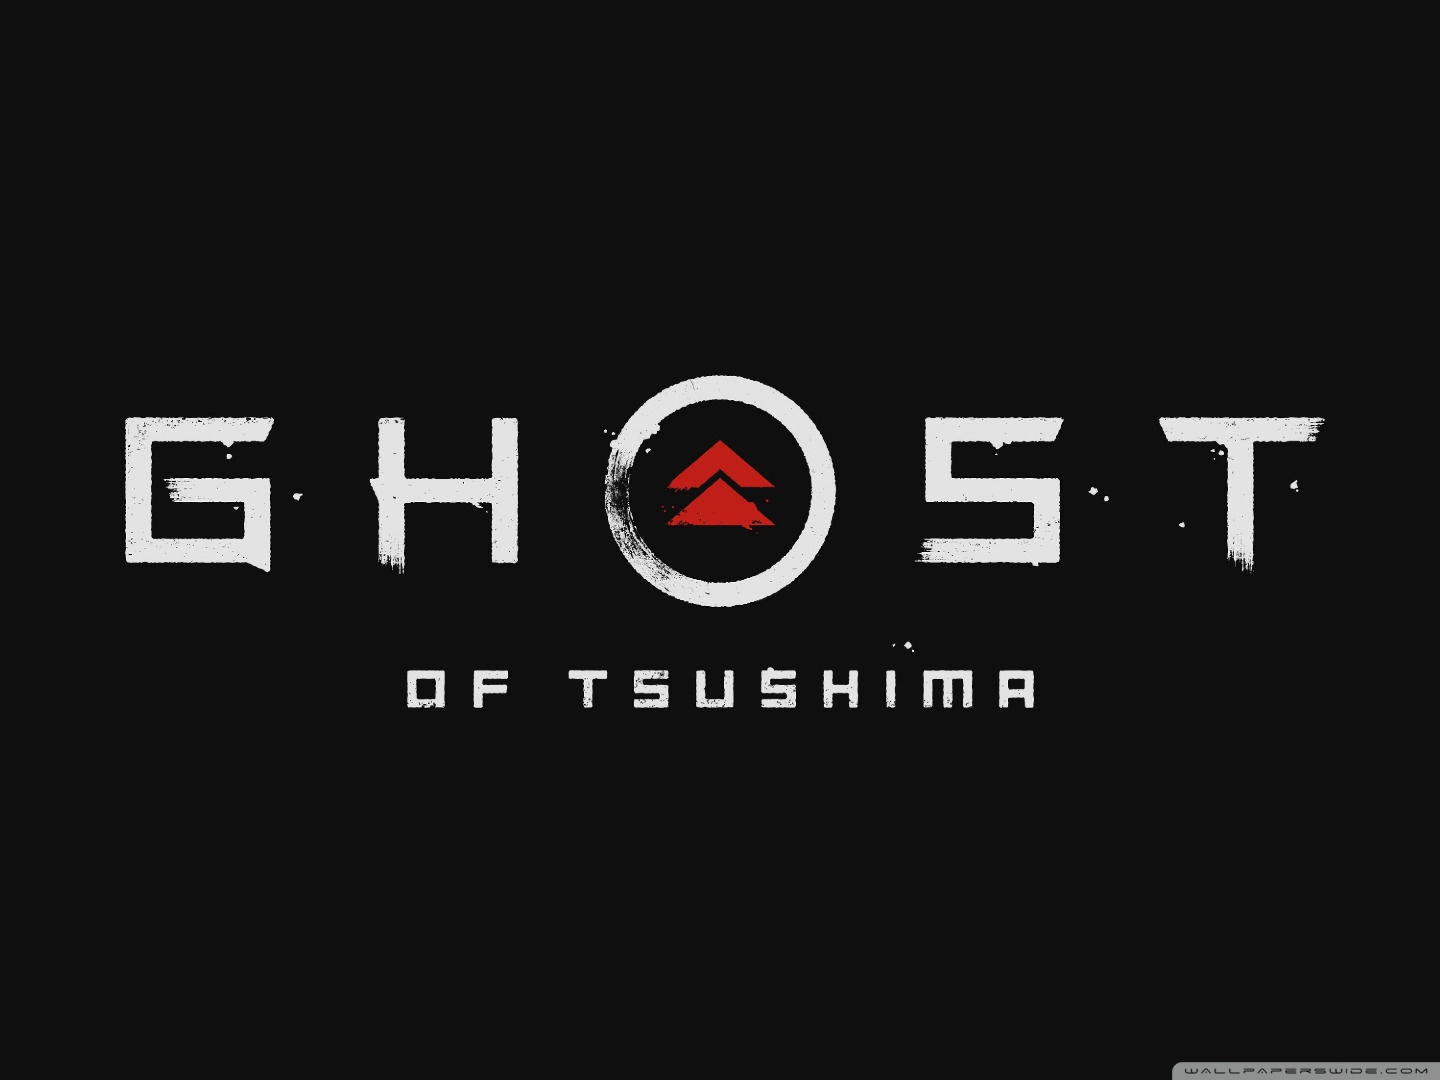 Ghost Of Tsushima Ultra Hd Desktop Background Wallpaper For 4k Uhd Tv Widescreen Ultrawide Desktop Laptop Tablet Smartphone